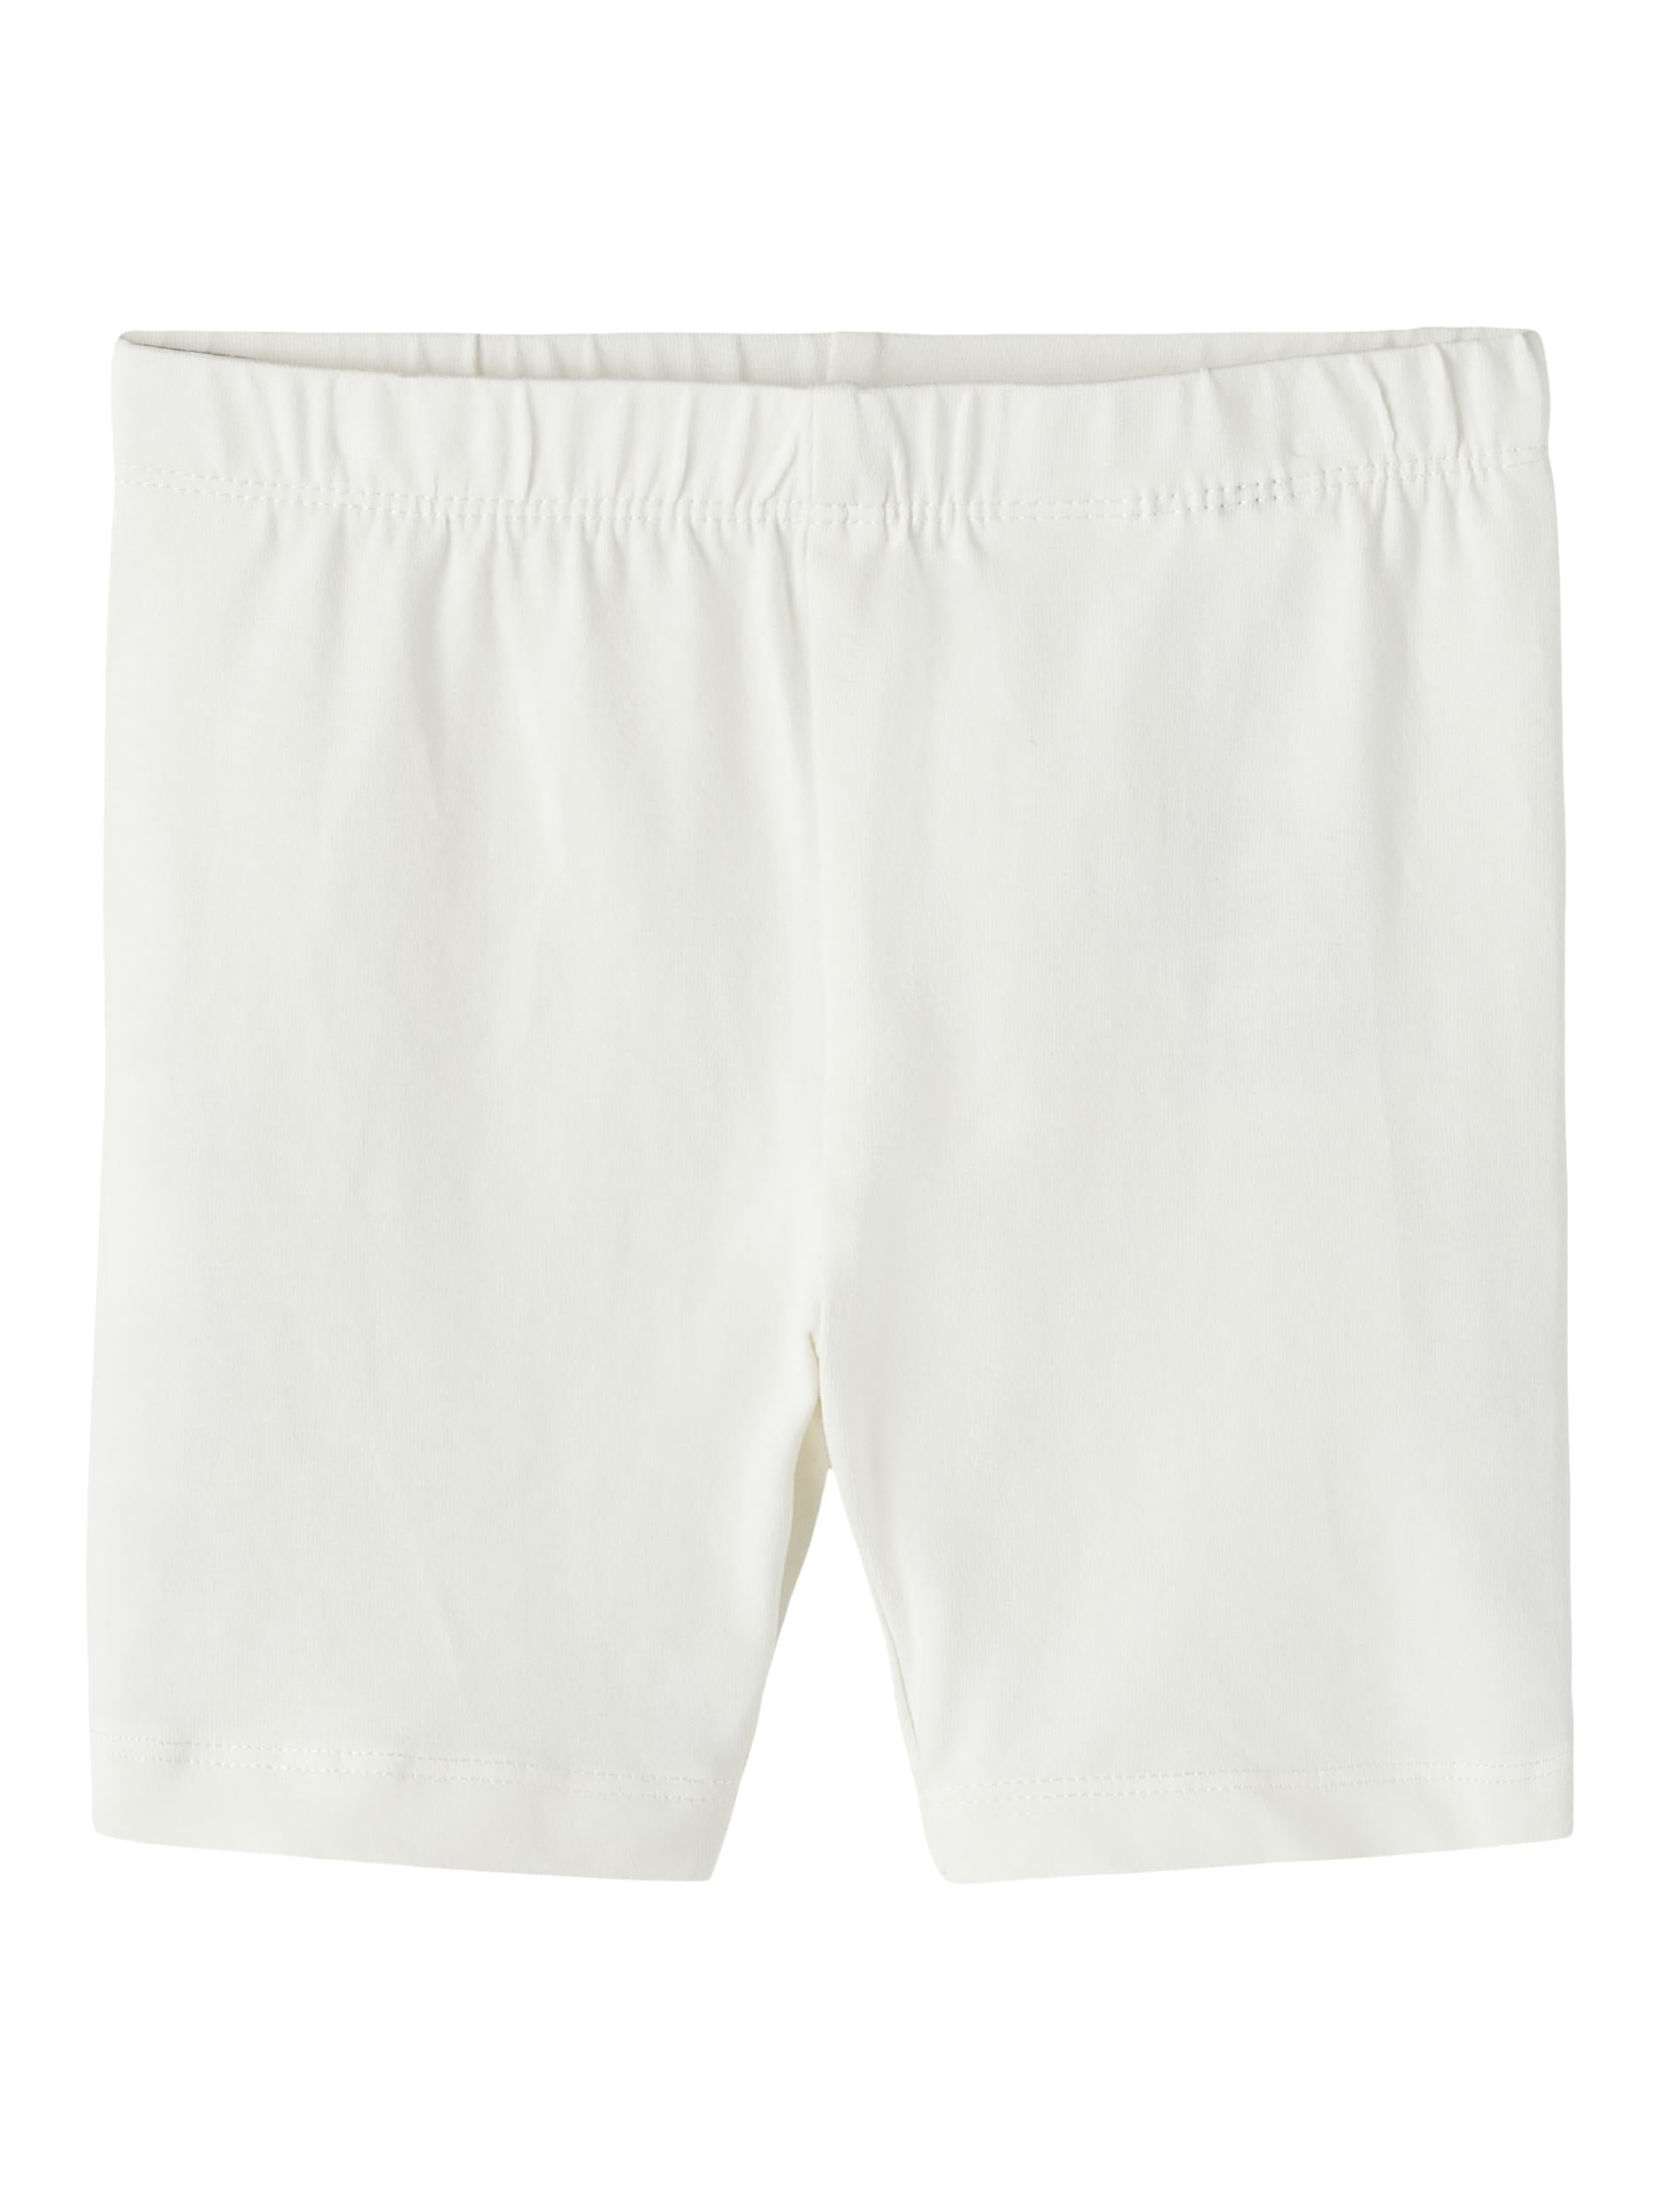 Vivian Solid Short Legging - White Alyssum Front View